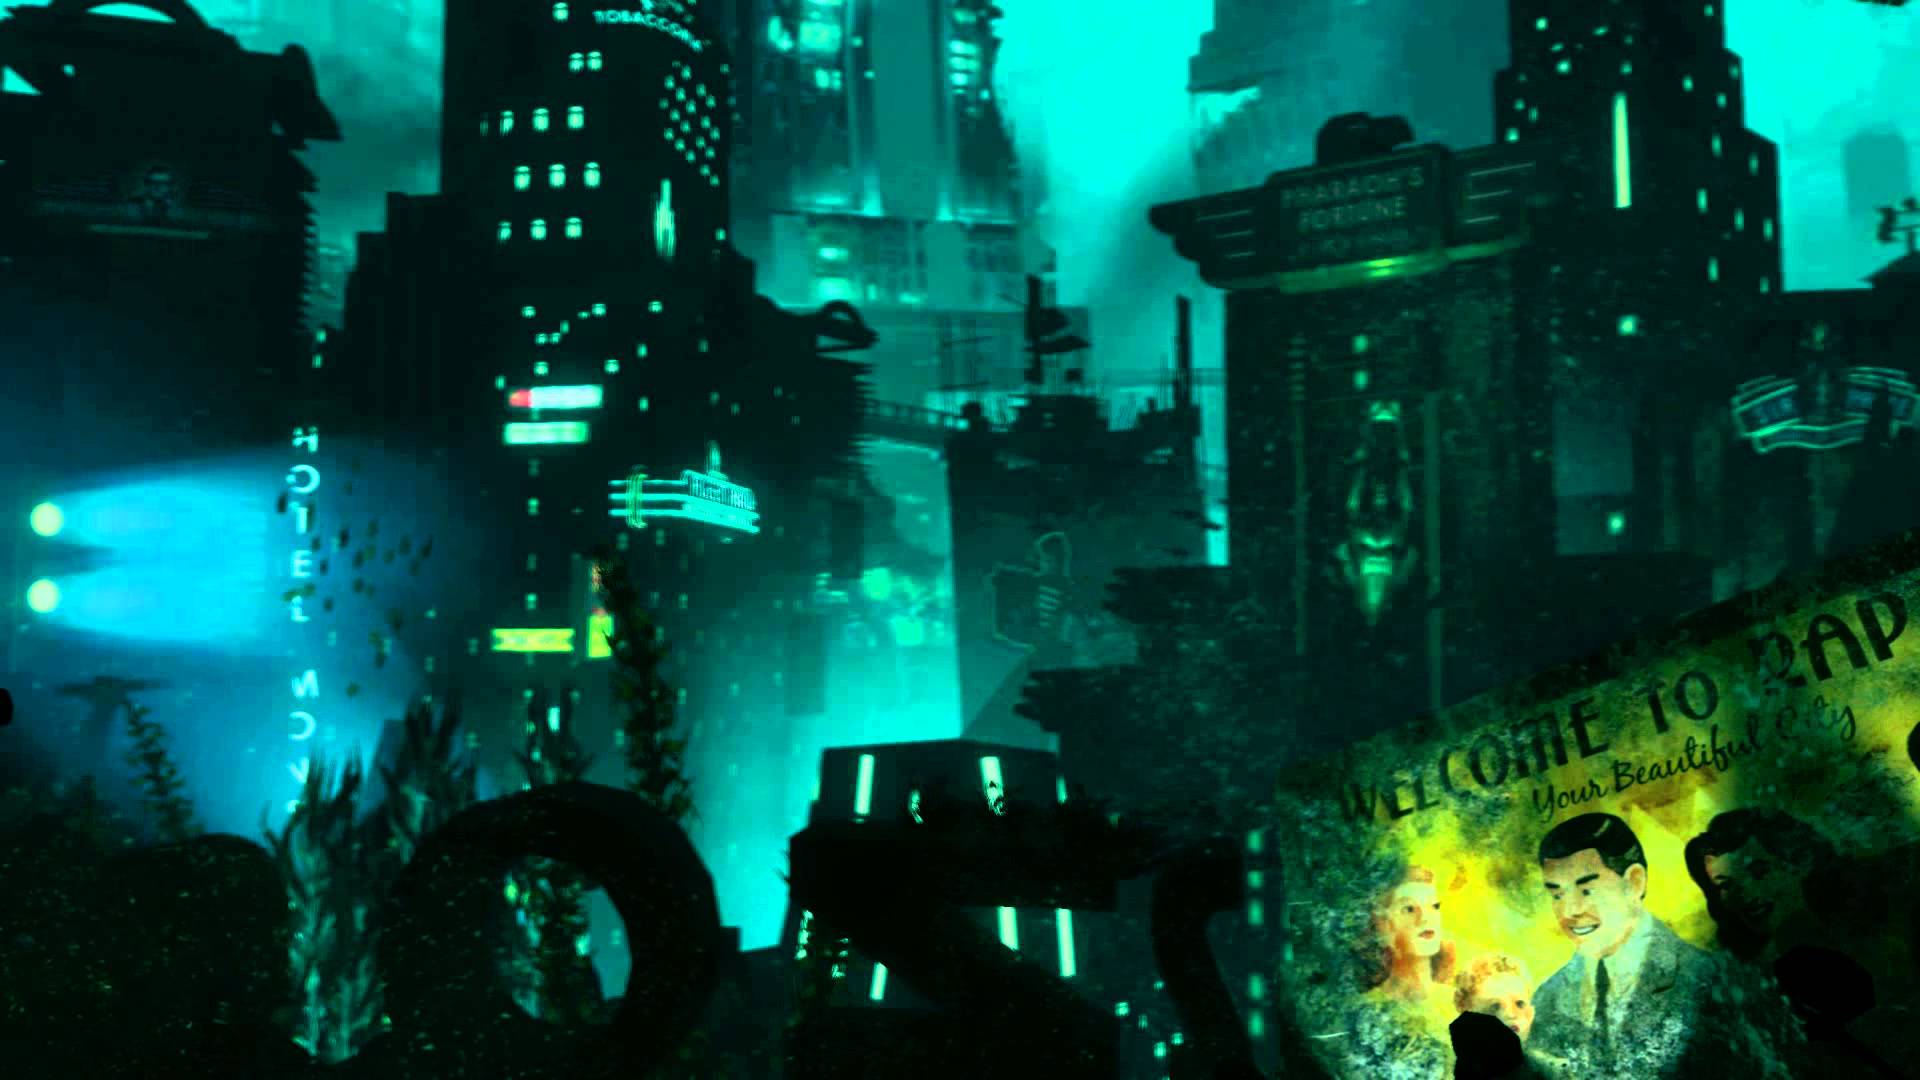 DreamScene Live Wallpaper - Bioshock 2 - Rapture 1080p - YouTube